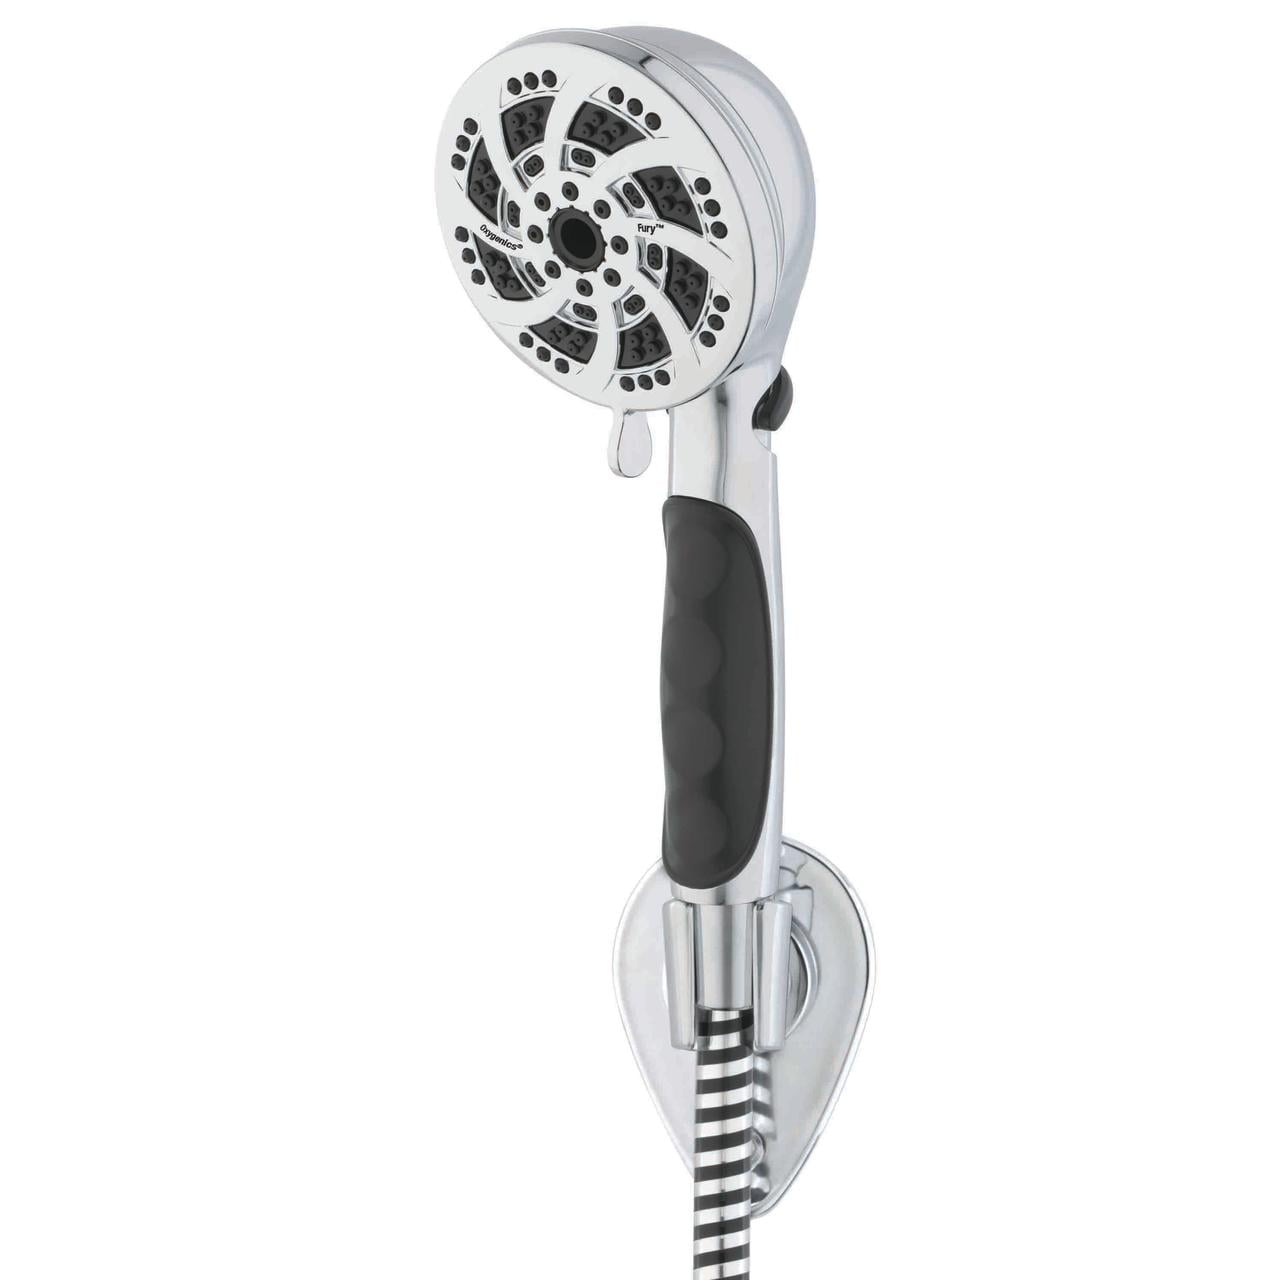 Handheld RV Shower Head High Pressure Powerful Shower Spray RV Motorhomes 